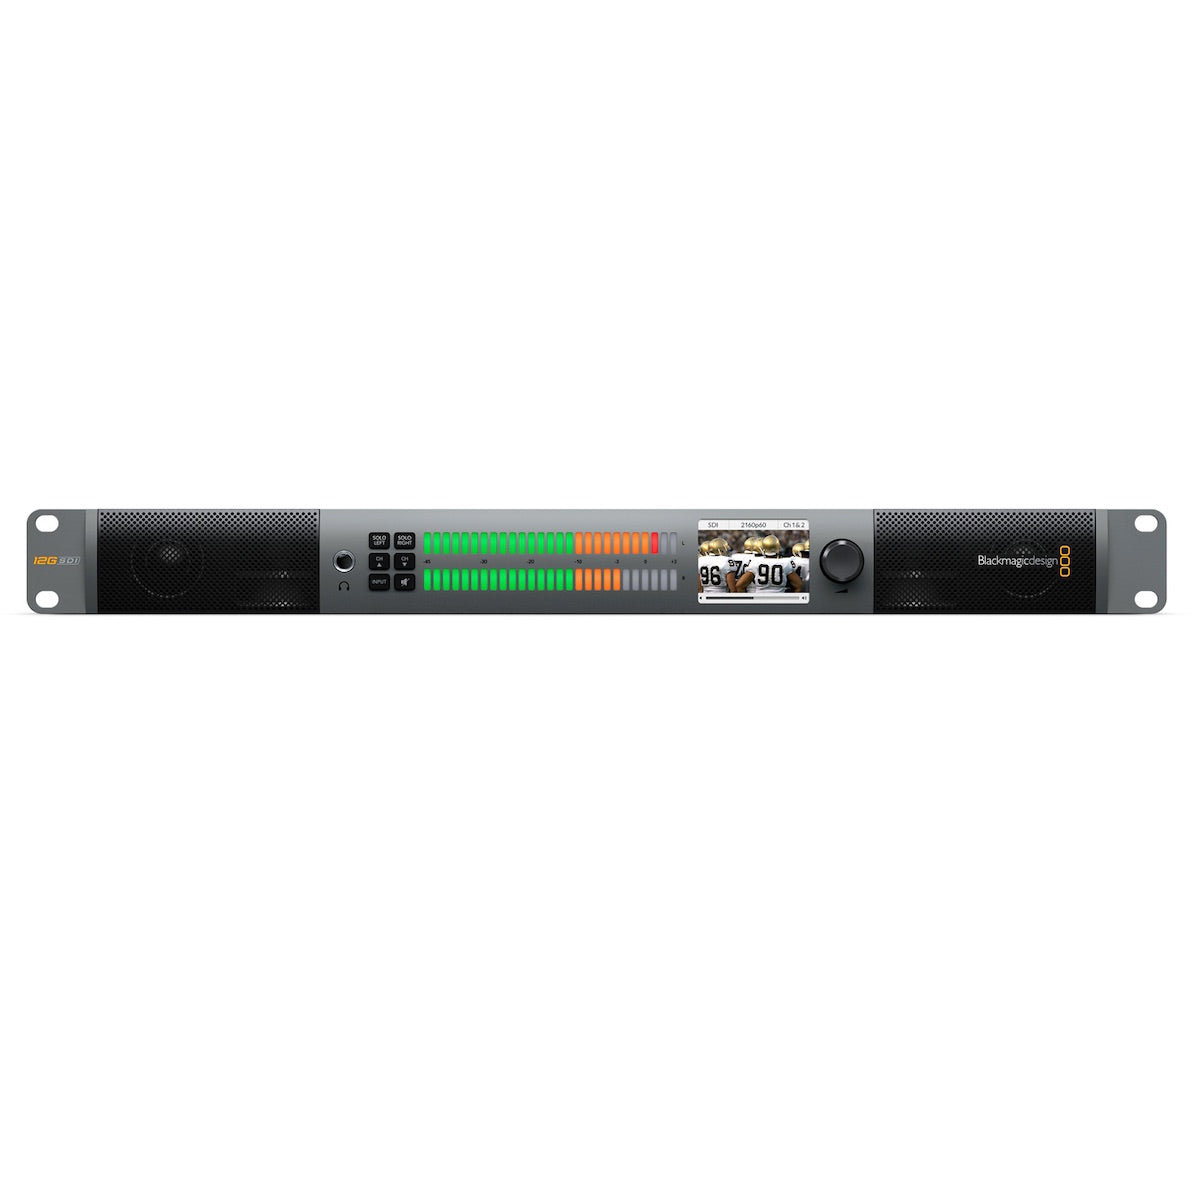 Blackmagic Design Audio Monitor 12G - Rack Mount Monitoring